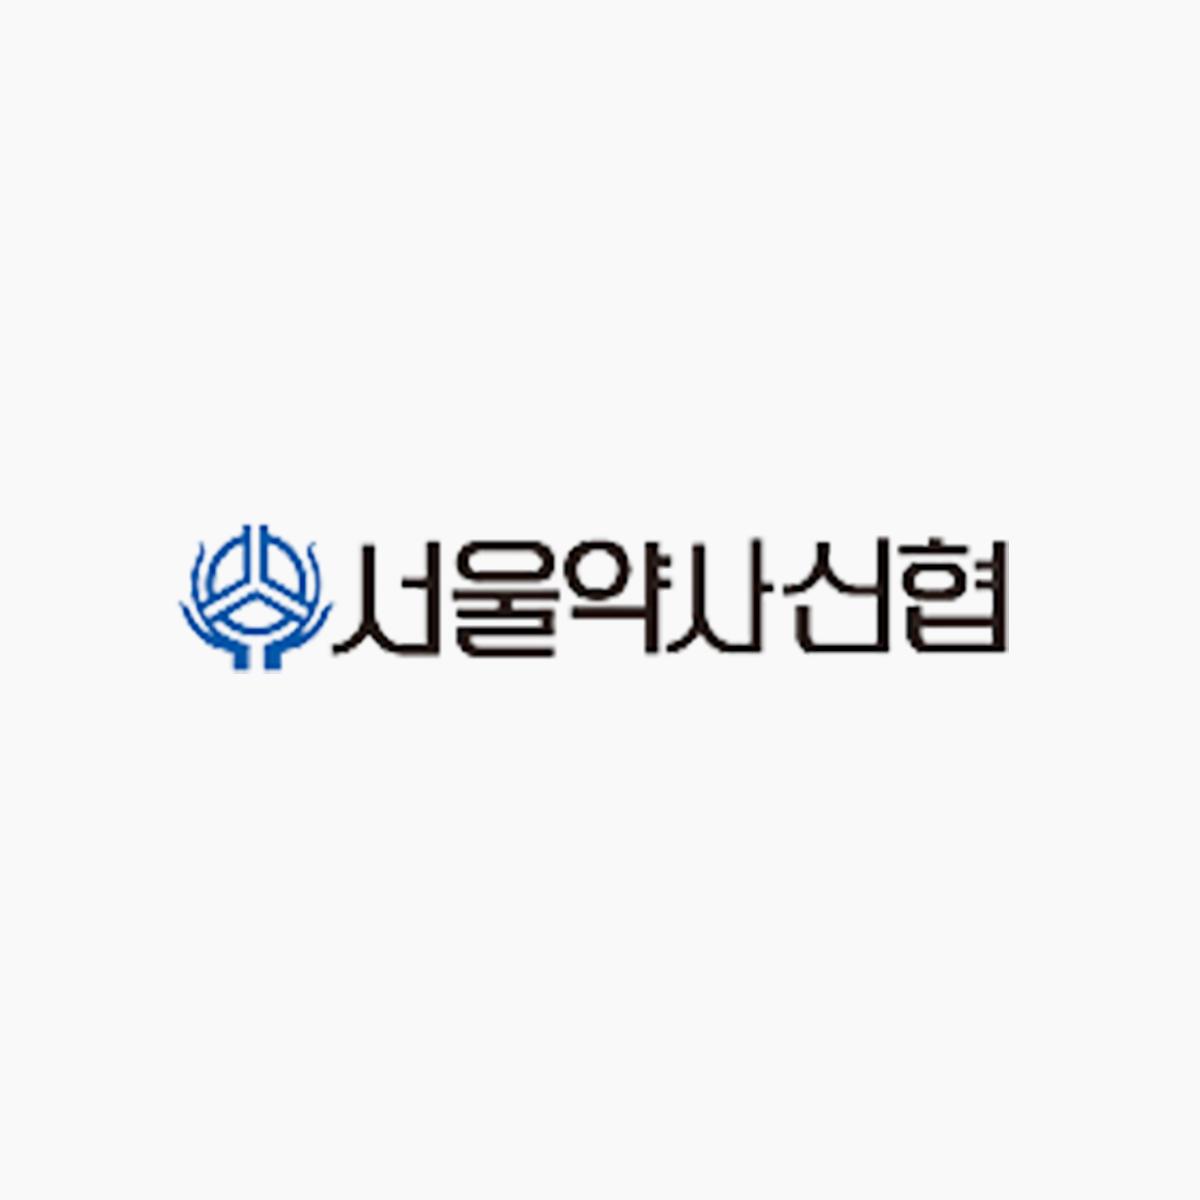 Seoul Pharmacist Credit Union